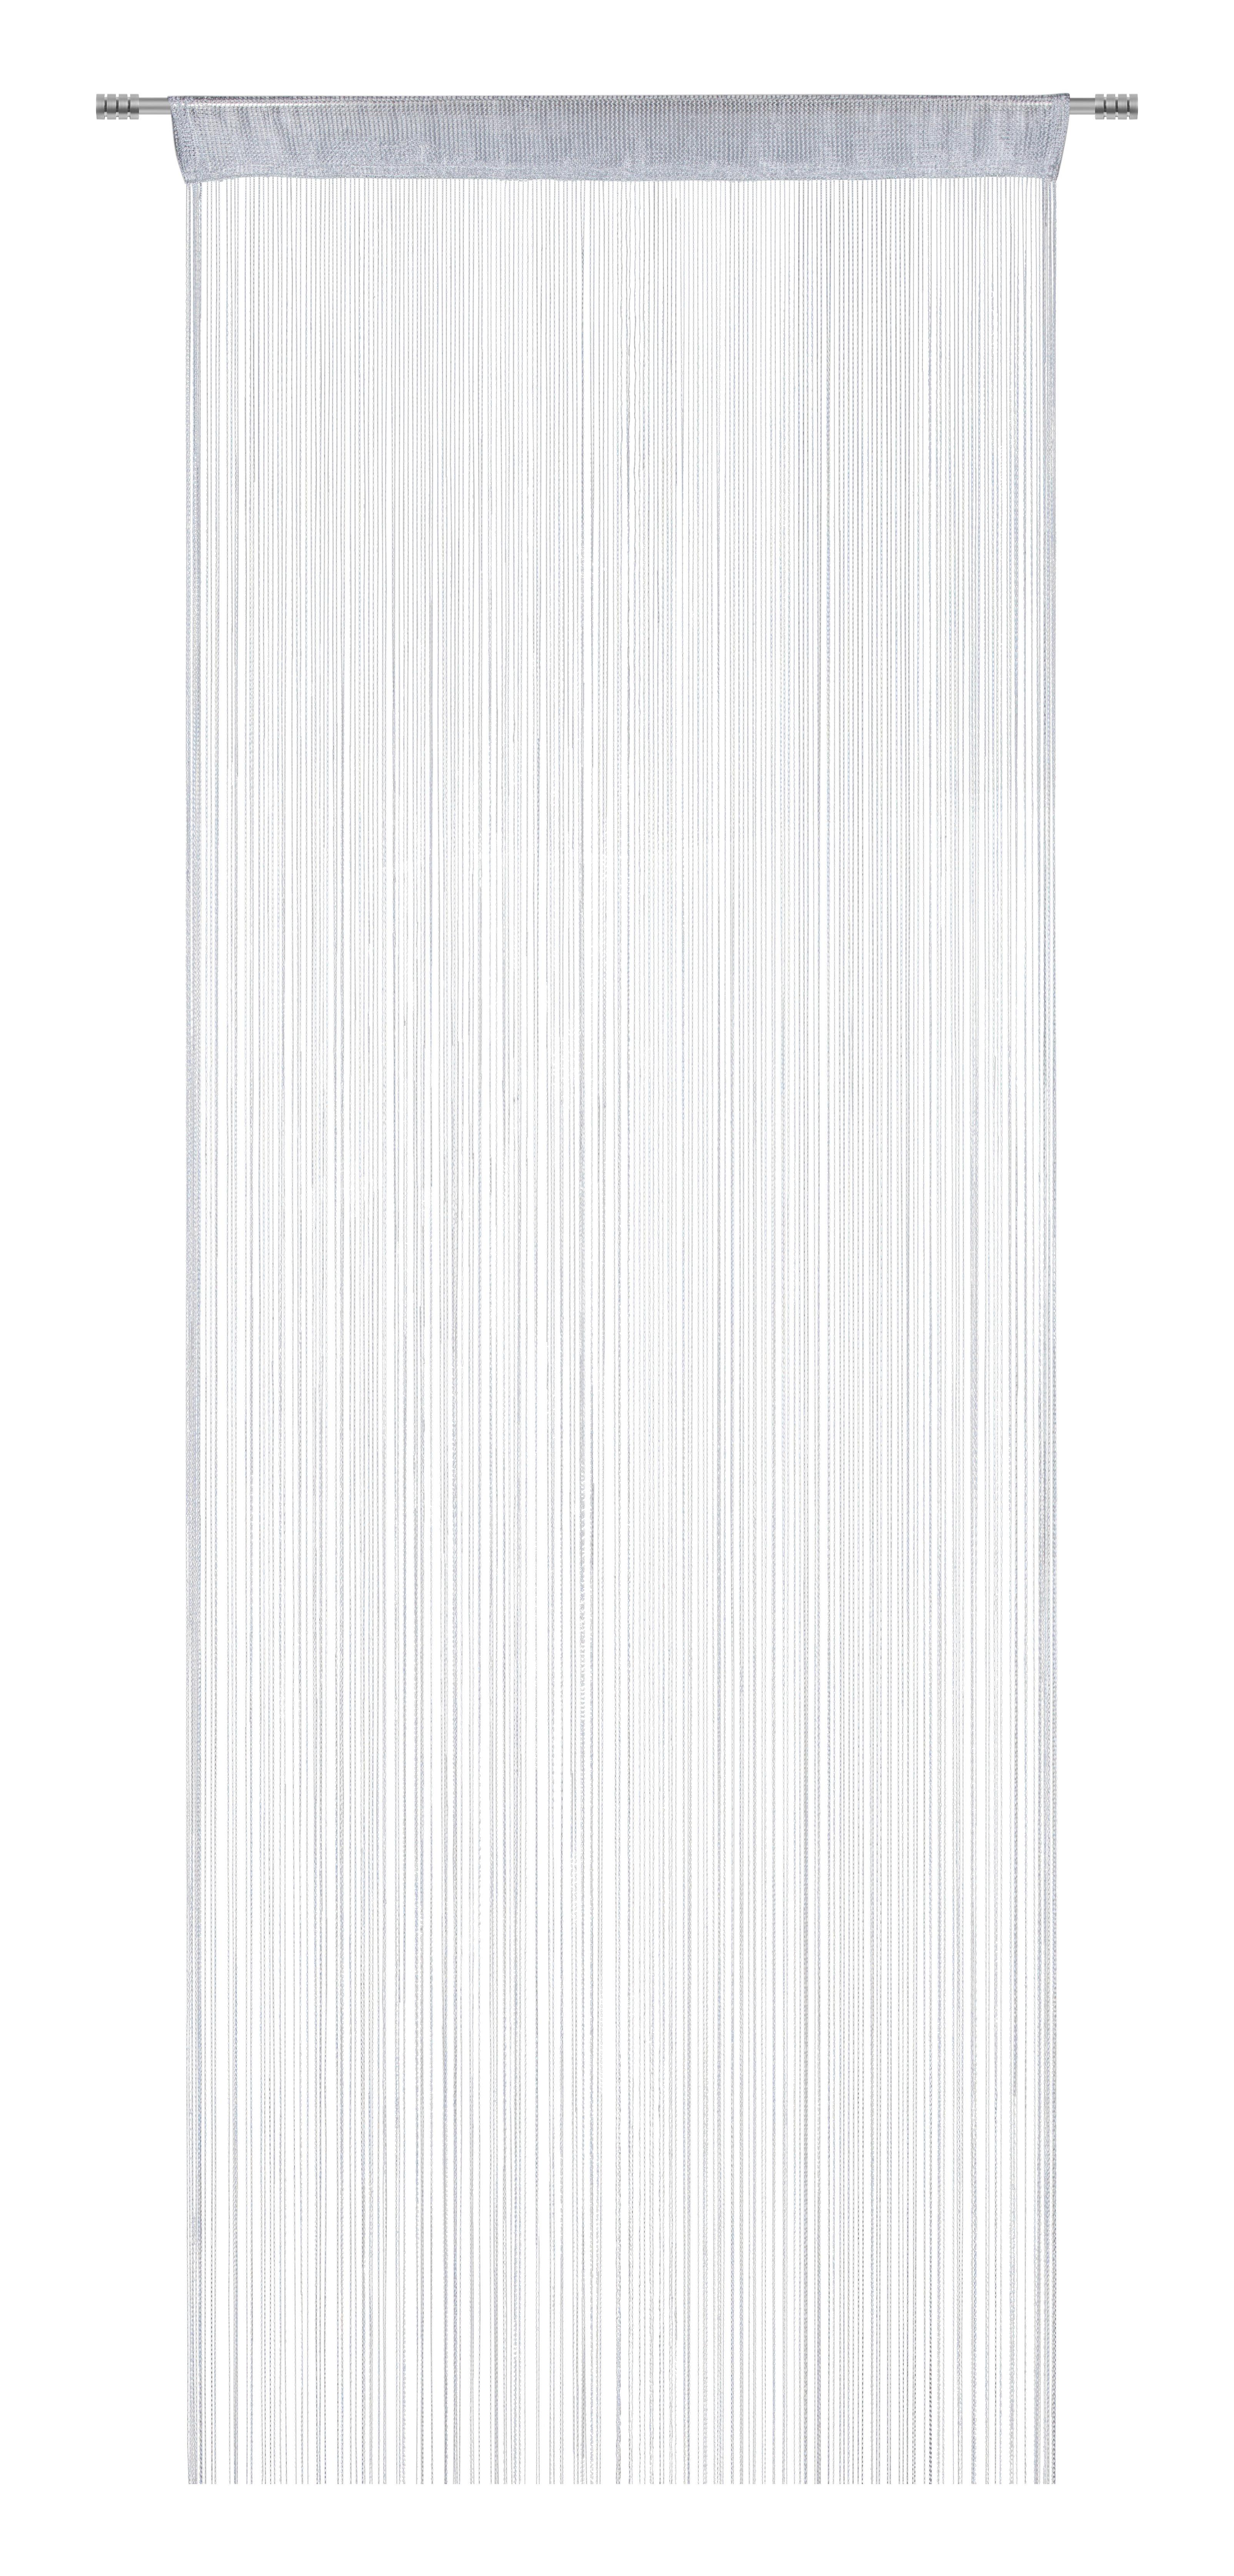 Fadenstore Franz ca. 90x245cm - Silberfarben, Textil (90/245cm) - Modern Living